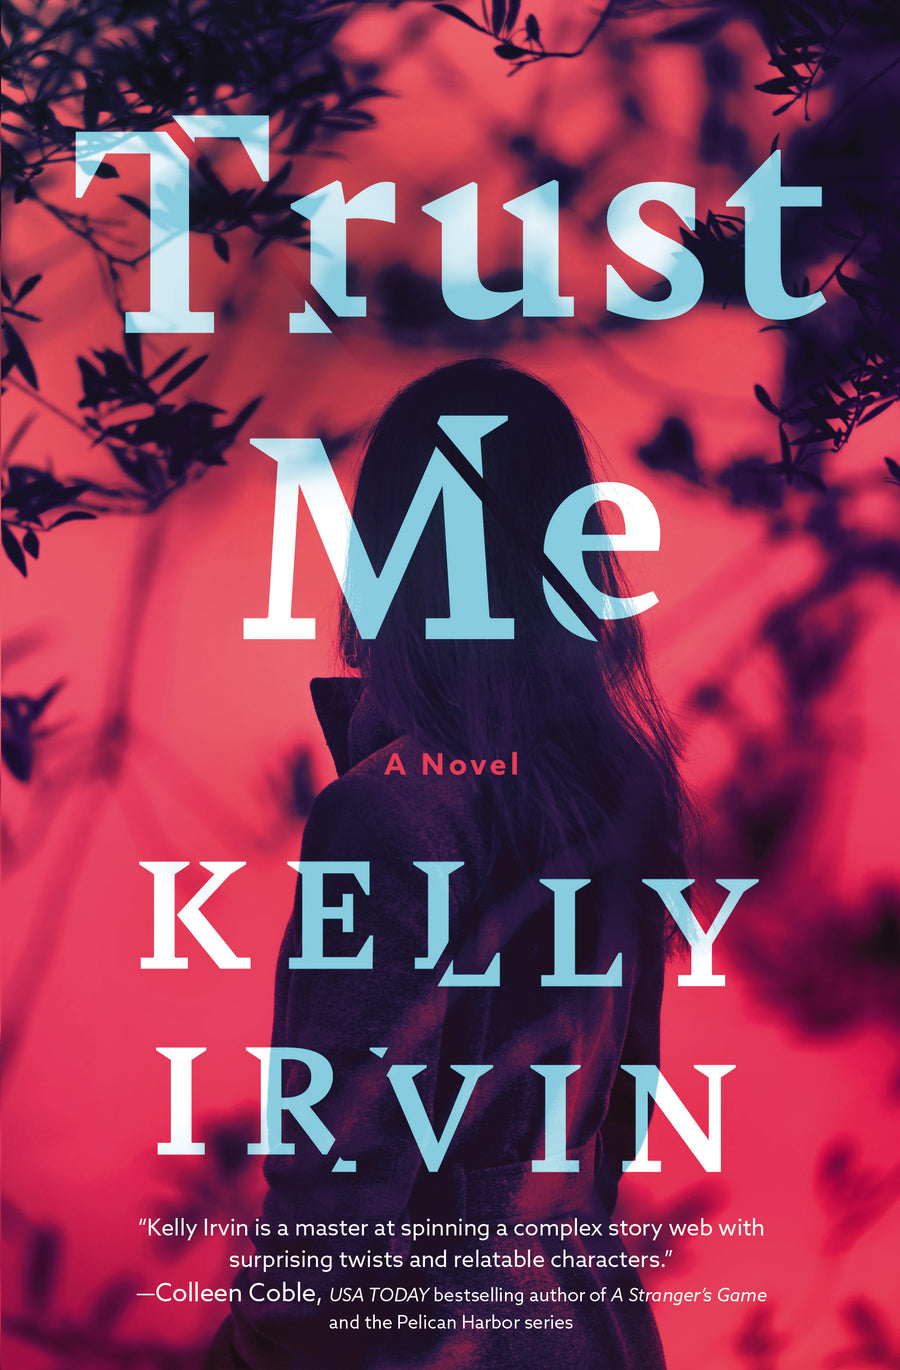 Trust Me by Kelly Irvin